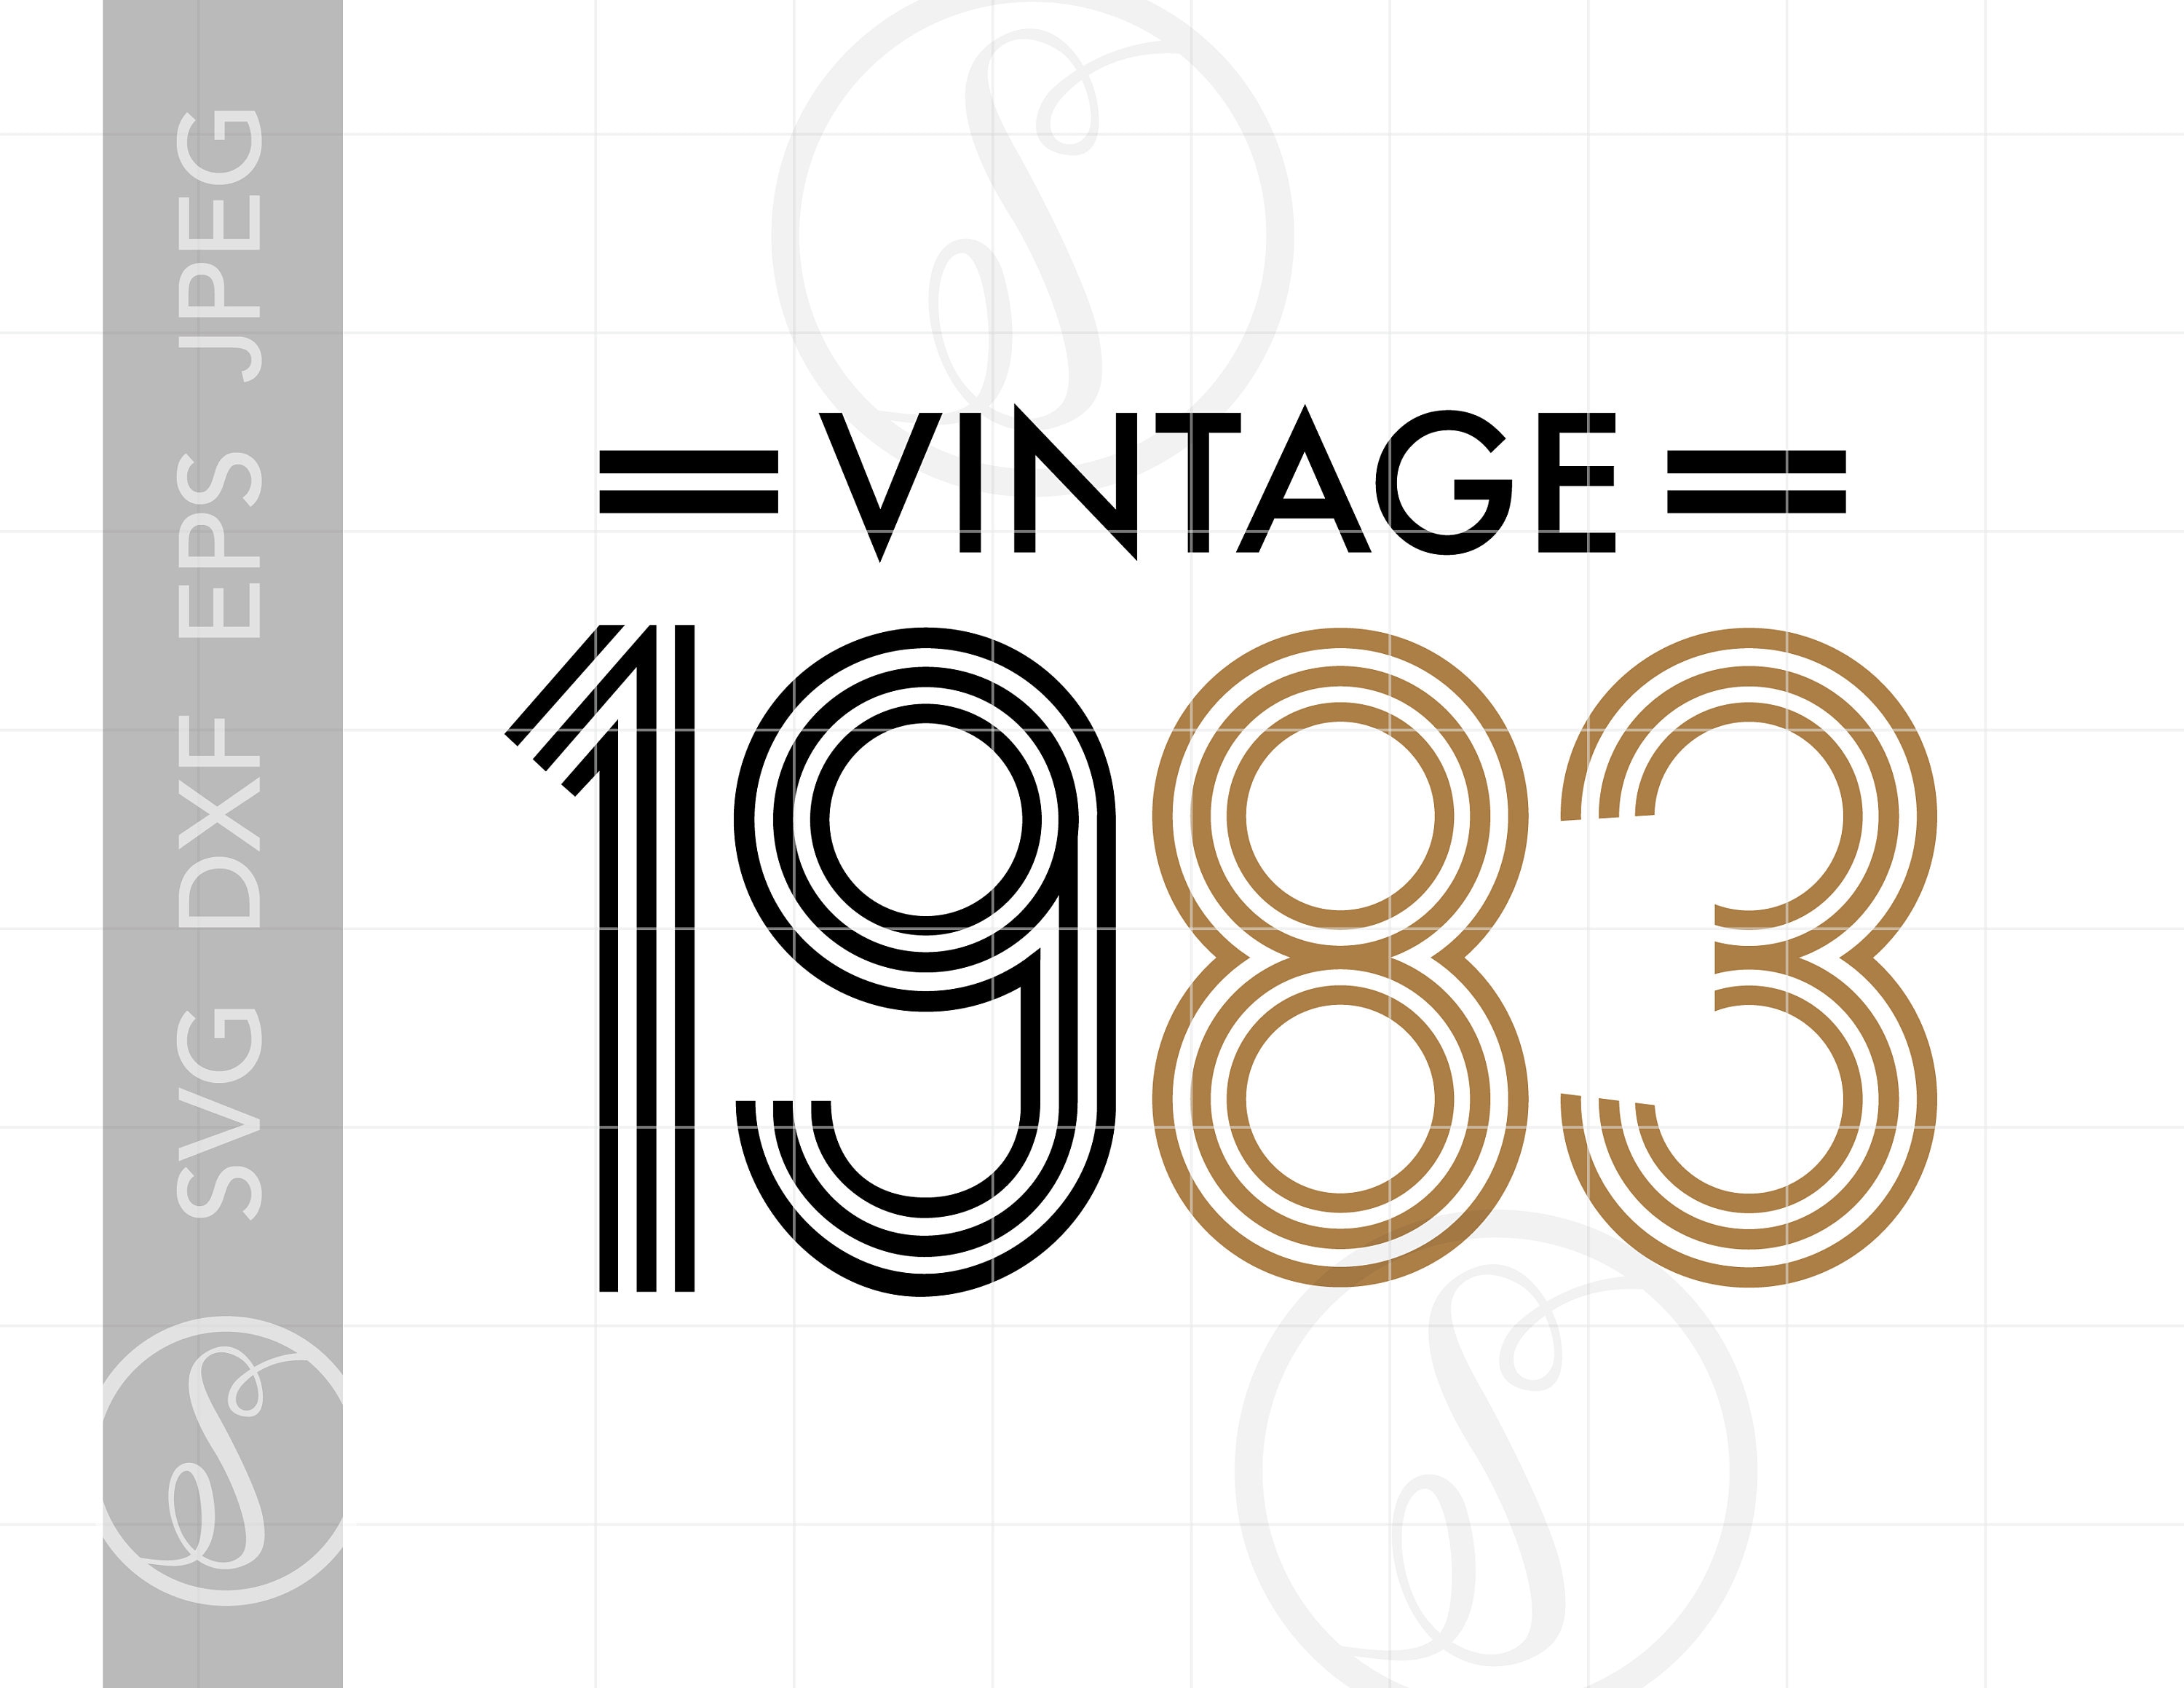 1983 Birthday SVG Vintage 1983 SVG Clipart Vintage 1983 pic